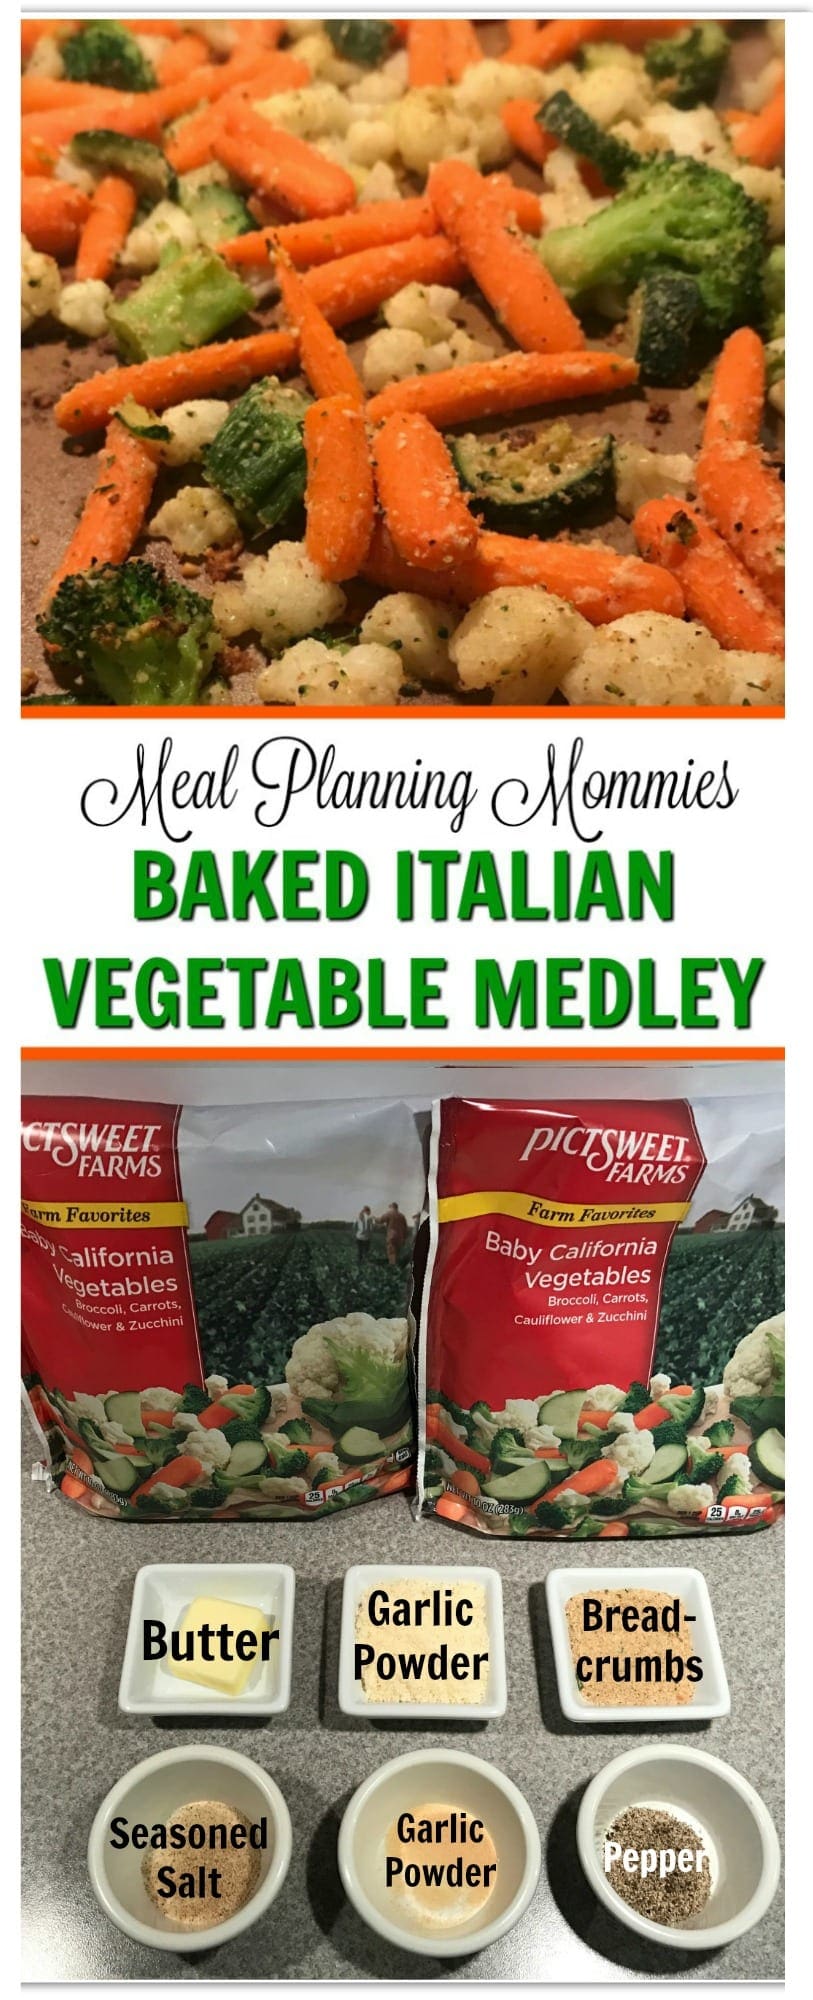 Baked Italian Vegetable Medley - Meal Planning Mommies